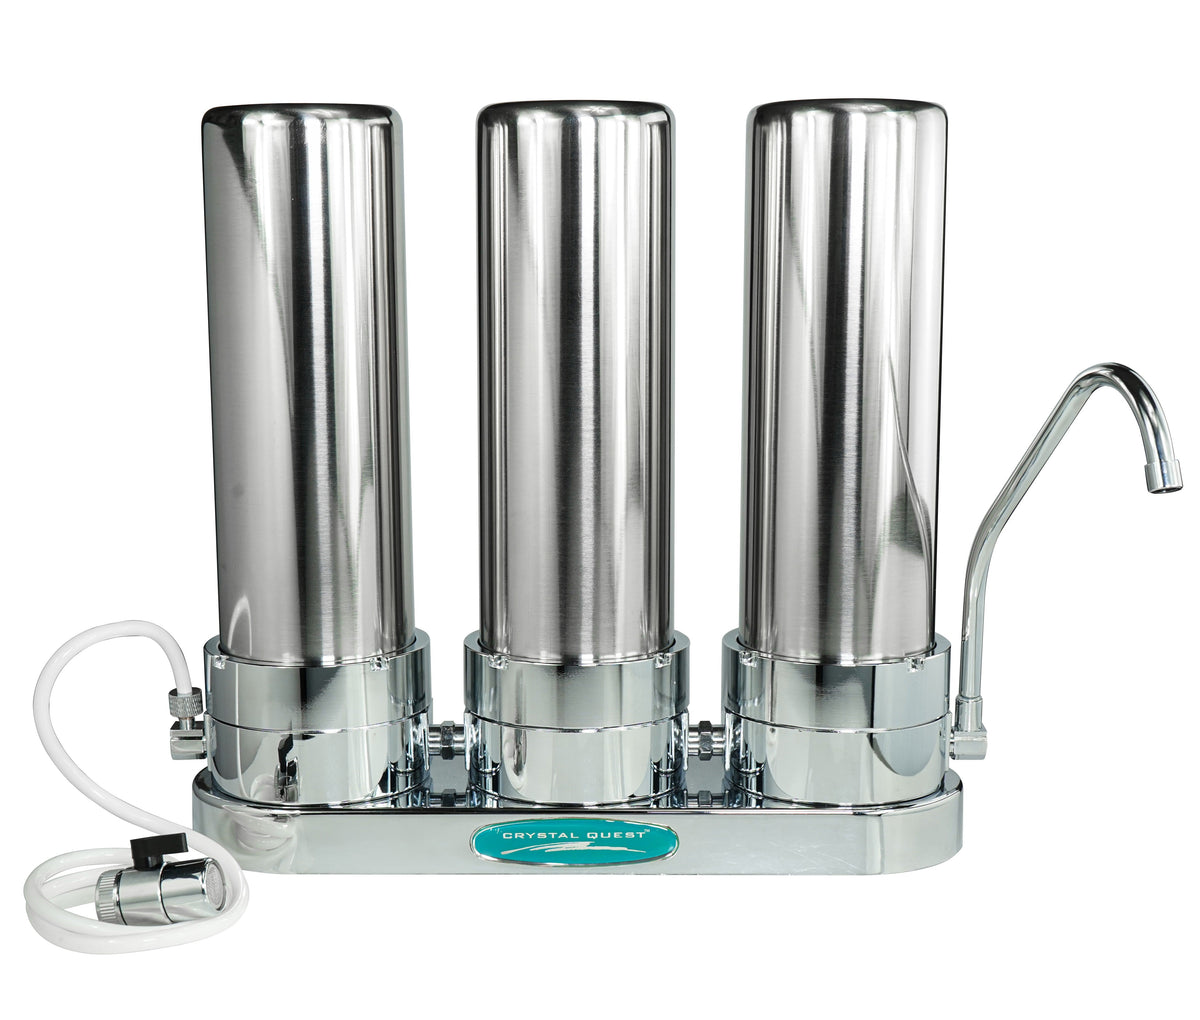 Triple / Stainless Steel Alkaline Countertop Water Filter System - Countertop Water Filters - Crystal Quest